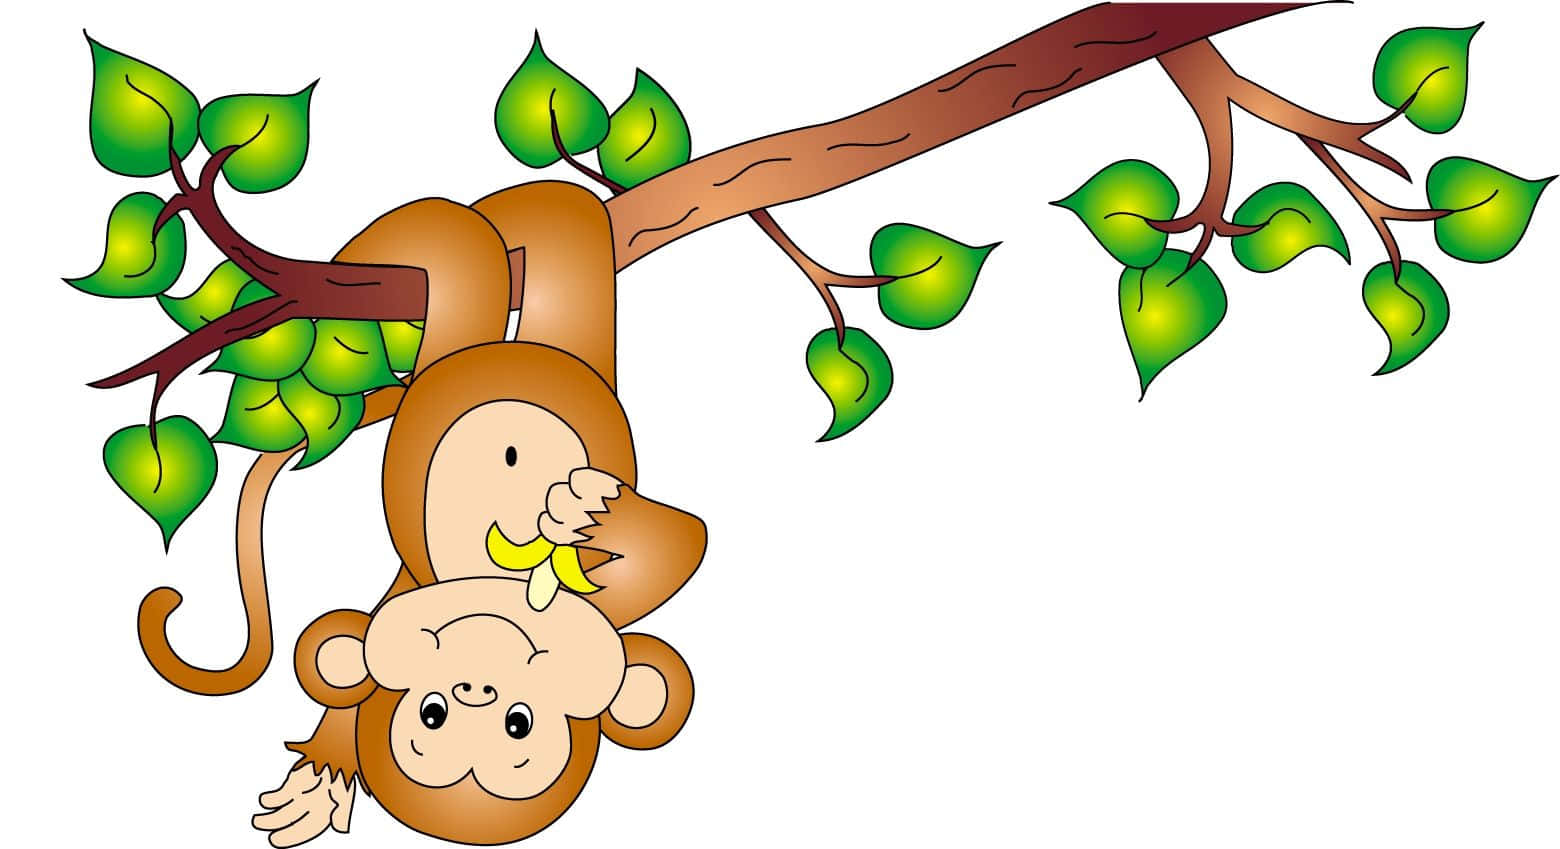 Caption: Adorable Cartoon Monkey Swinging on a Vine